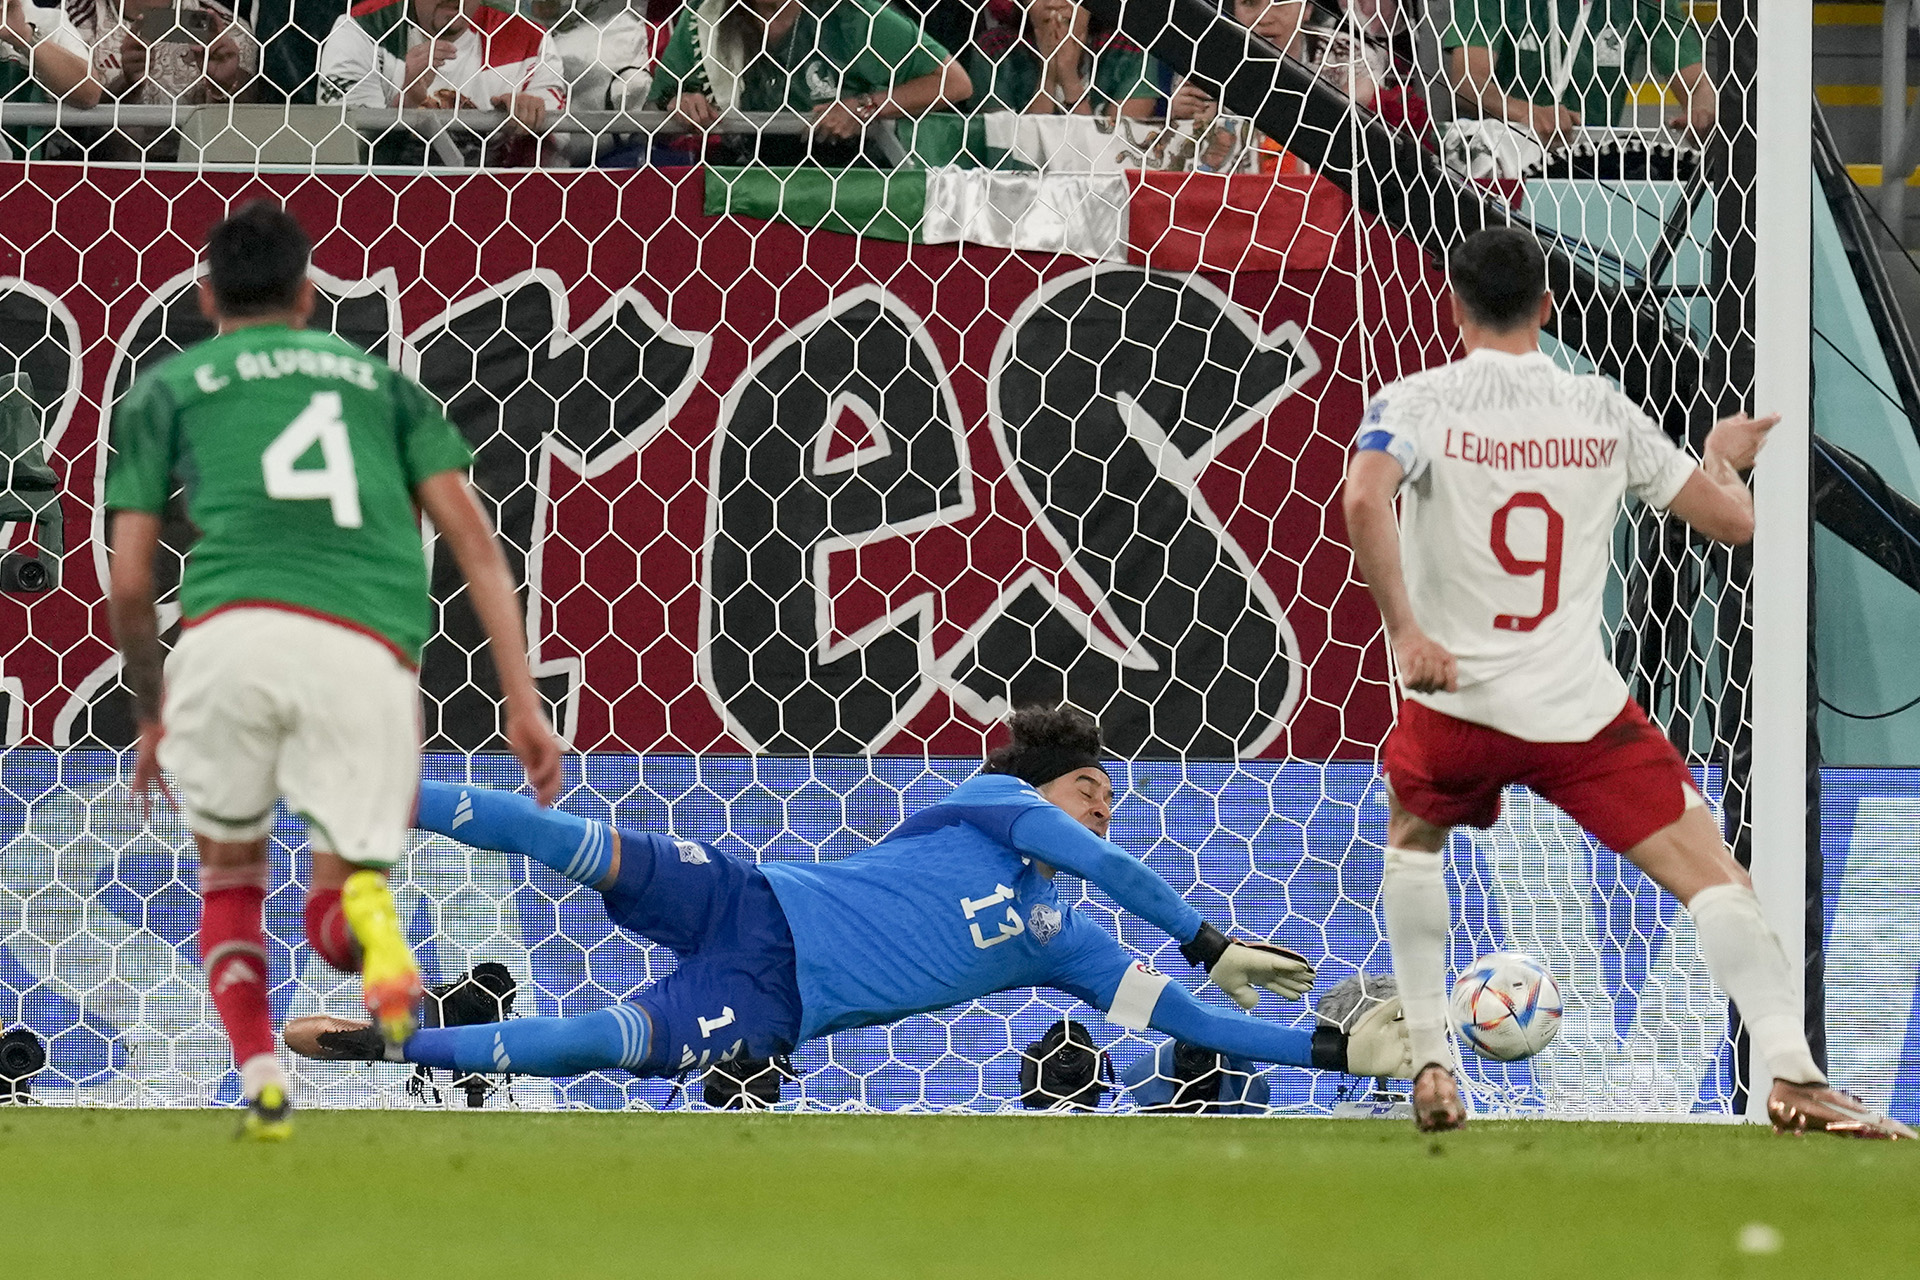 Mexico goalkeeper Guillermo Ochoa saves the penalty taken by Poland's Robert Lewandowski in the World Cup Group C match, Tuesday, November 22, 2022, in Doha, Qatar.  (AP Photo/Themba Hadebe)